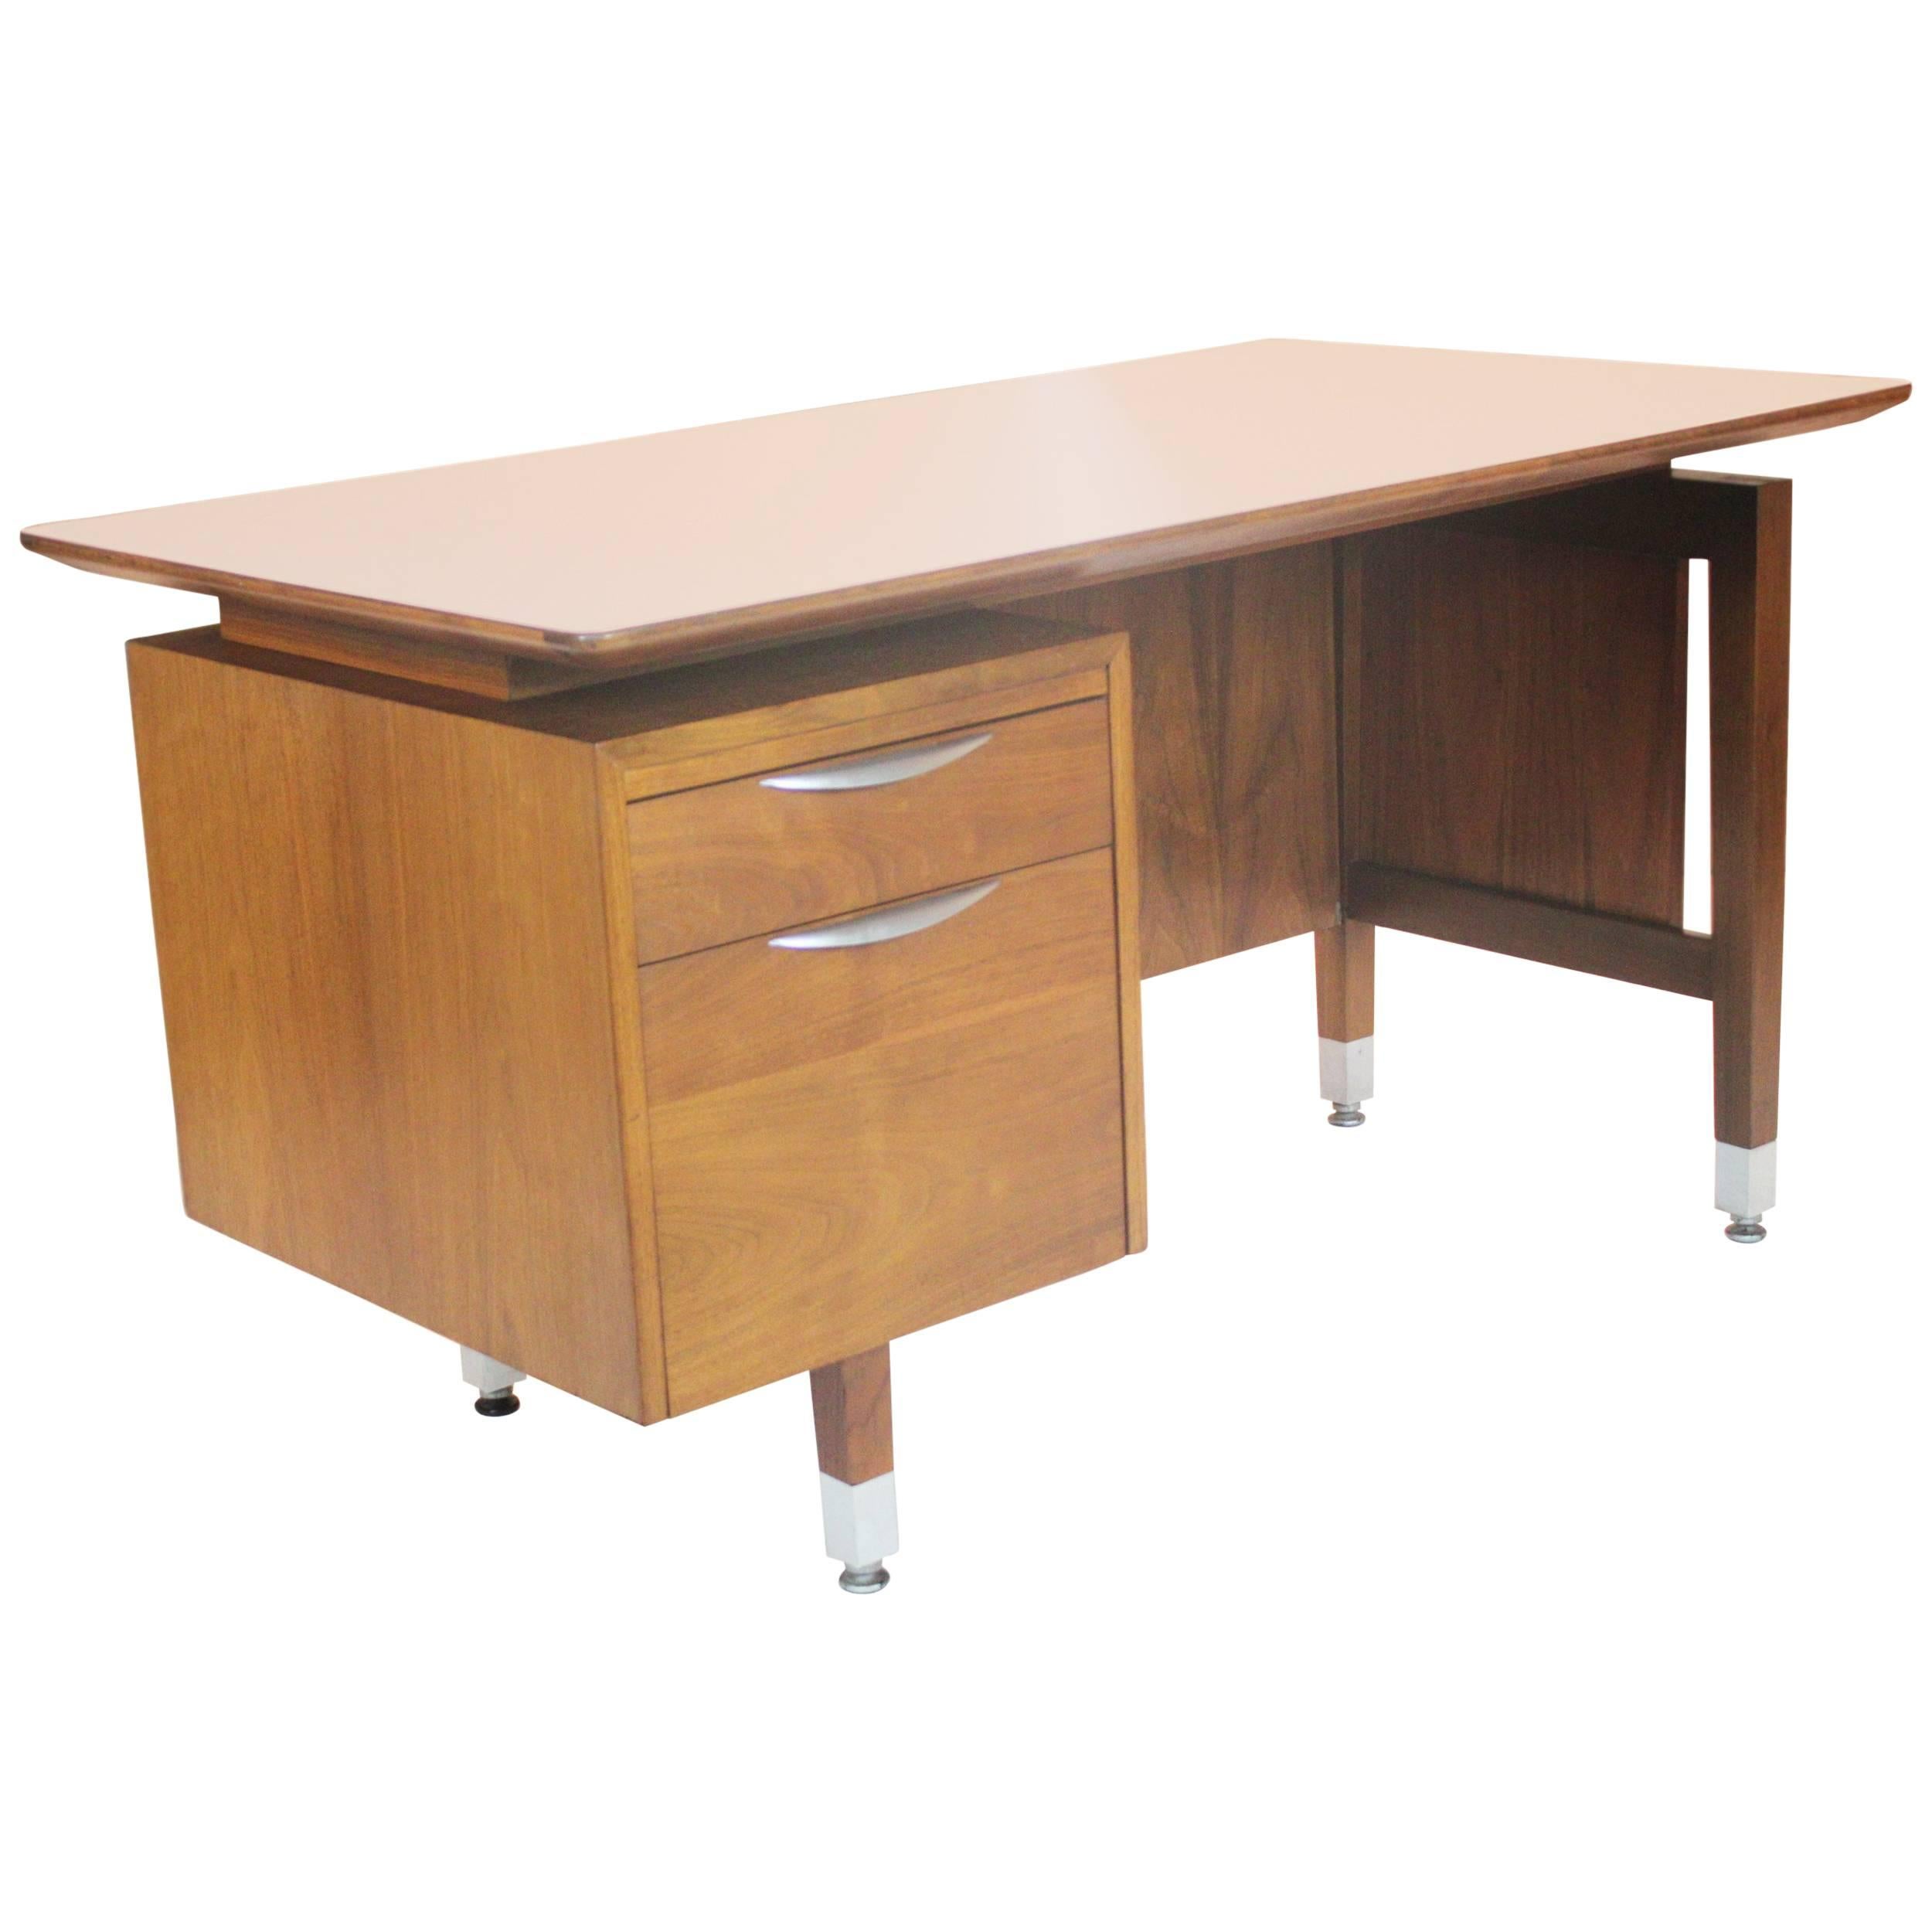 Wonderful, 1960s Mid-Century Modern Walnut Executive Desk by Thonet